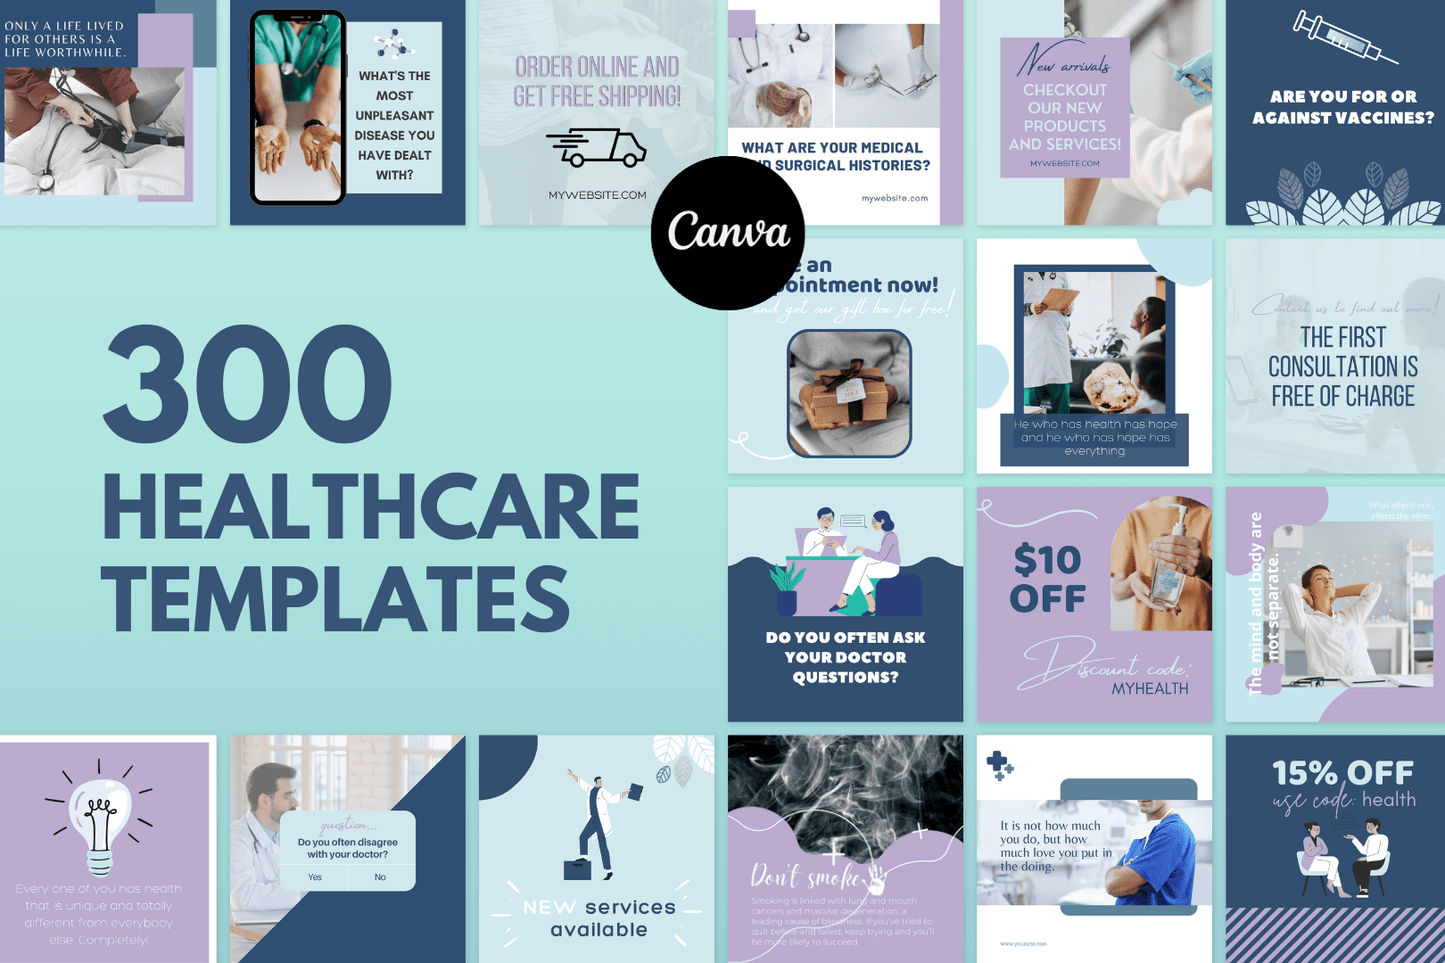 300 Healthcare Templates for Social Media